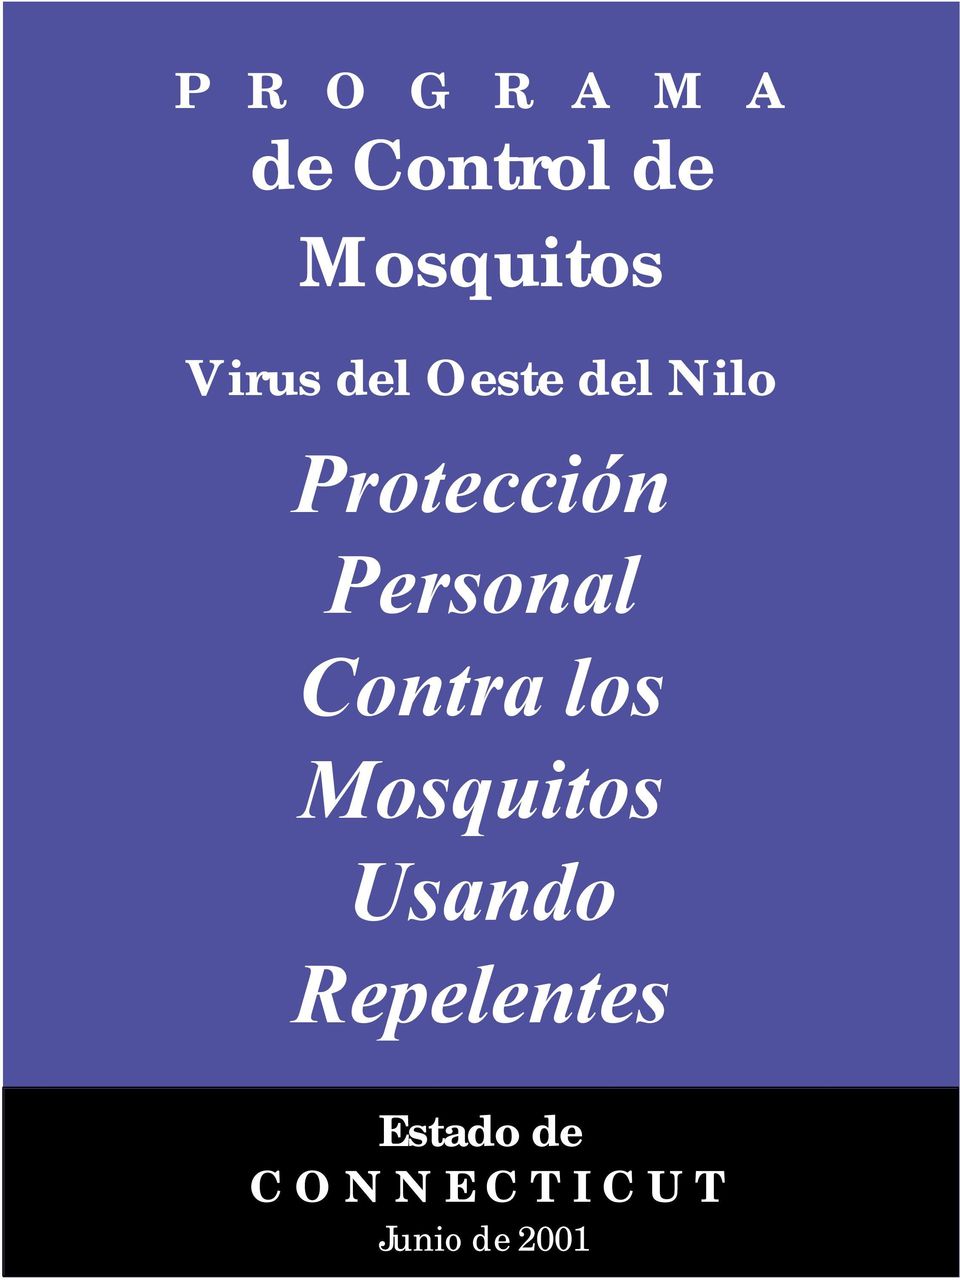 Personal Contra los Mosquitos Usando